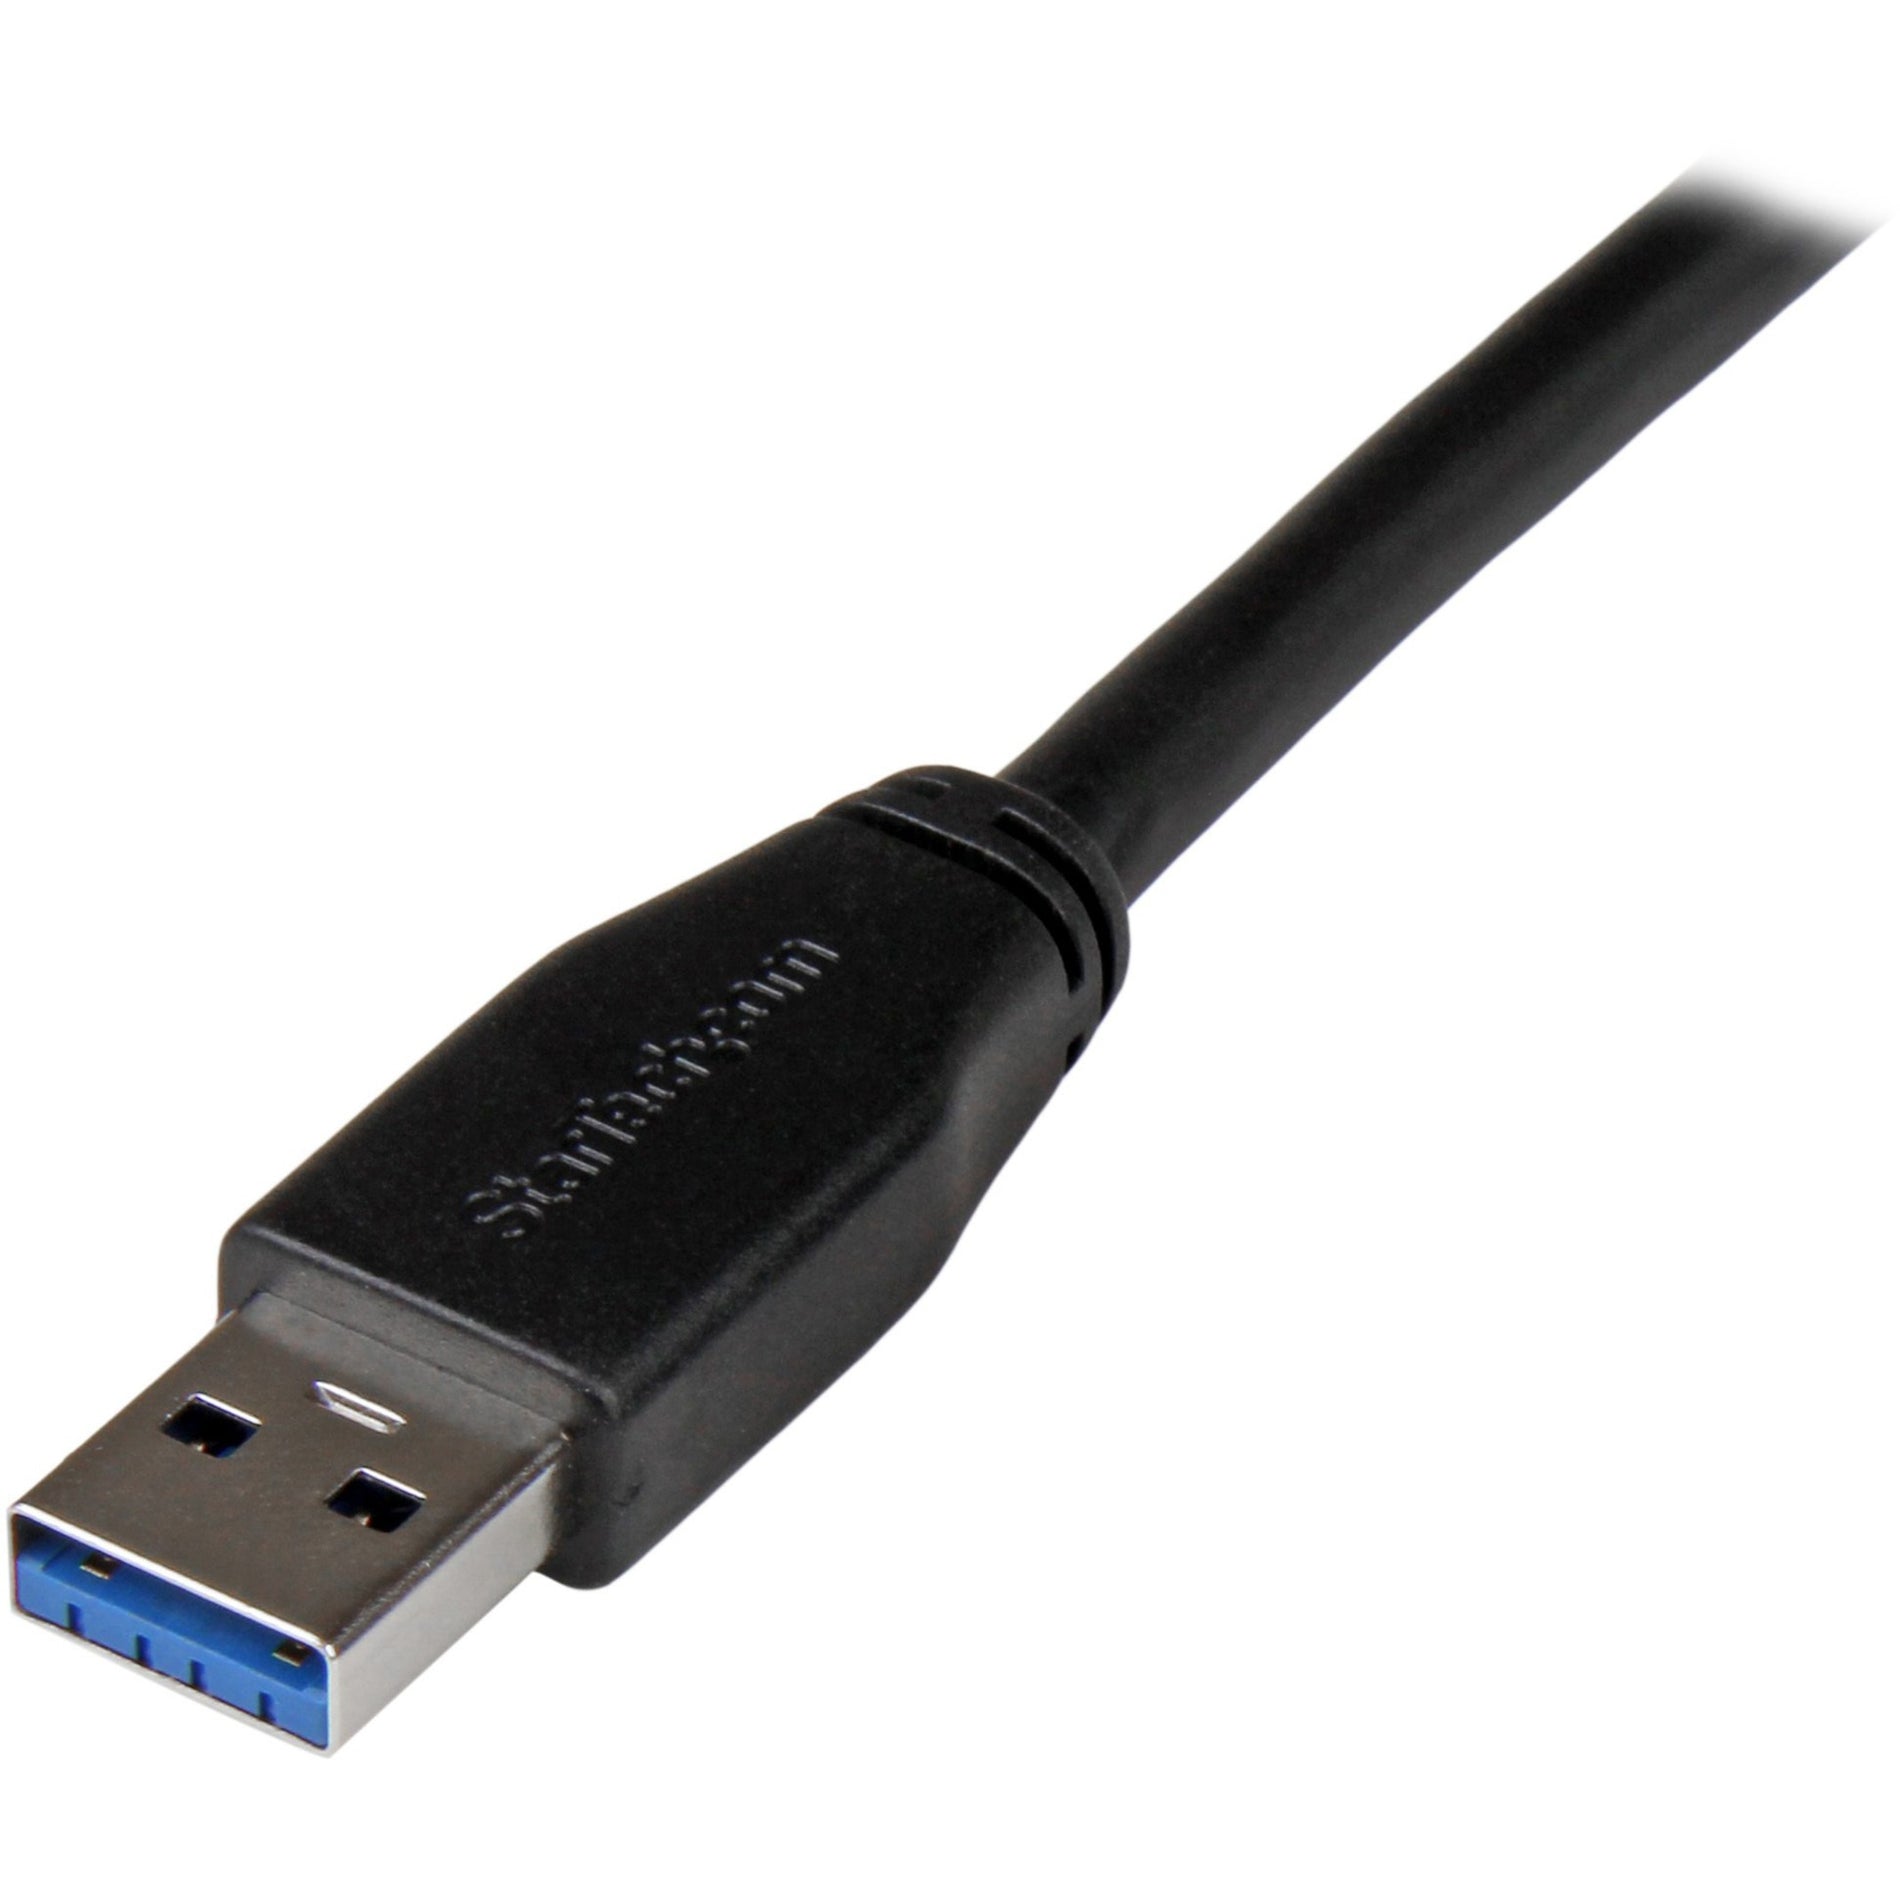 StarTech.com USB3SAB5M Active USB 3.0 USB-A to USB-B Cable - 5m, High-Speed Data Transfer, 16.40 ft Length